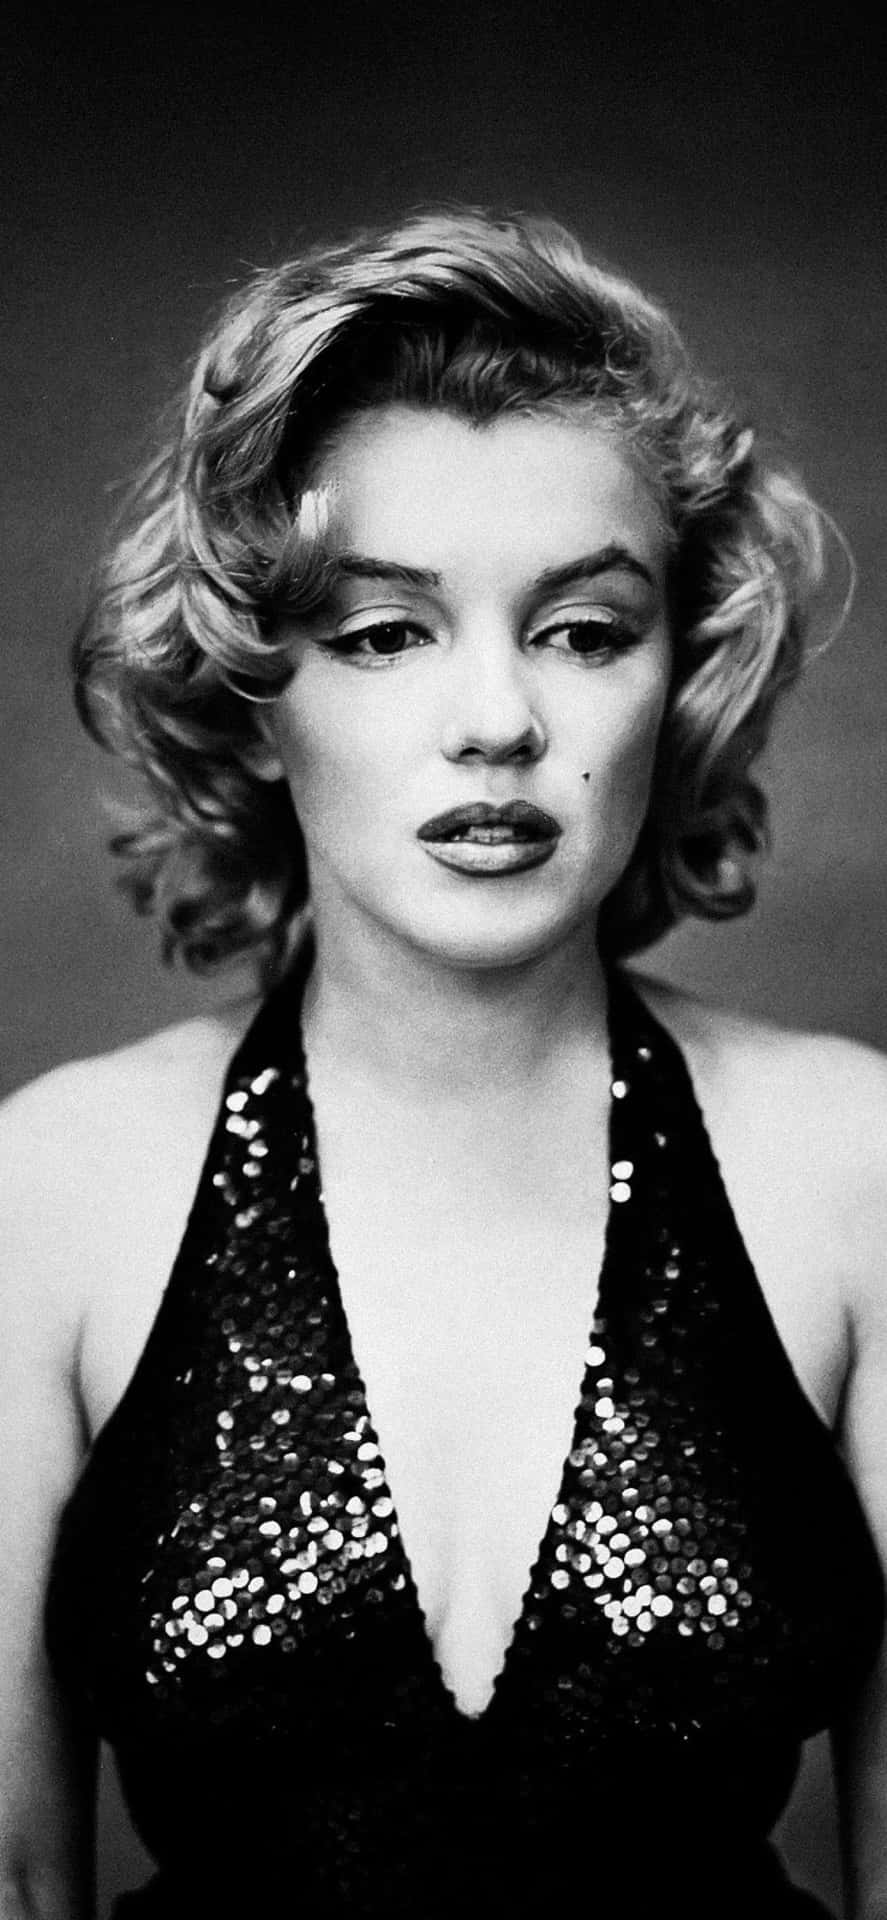 Marilyn Monroe Posing in Her Iconic Look on iPhone. Wallpaper